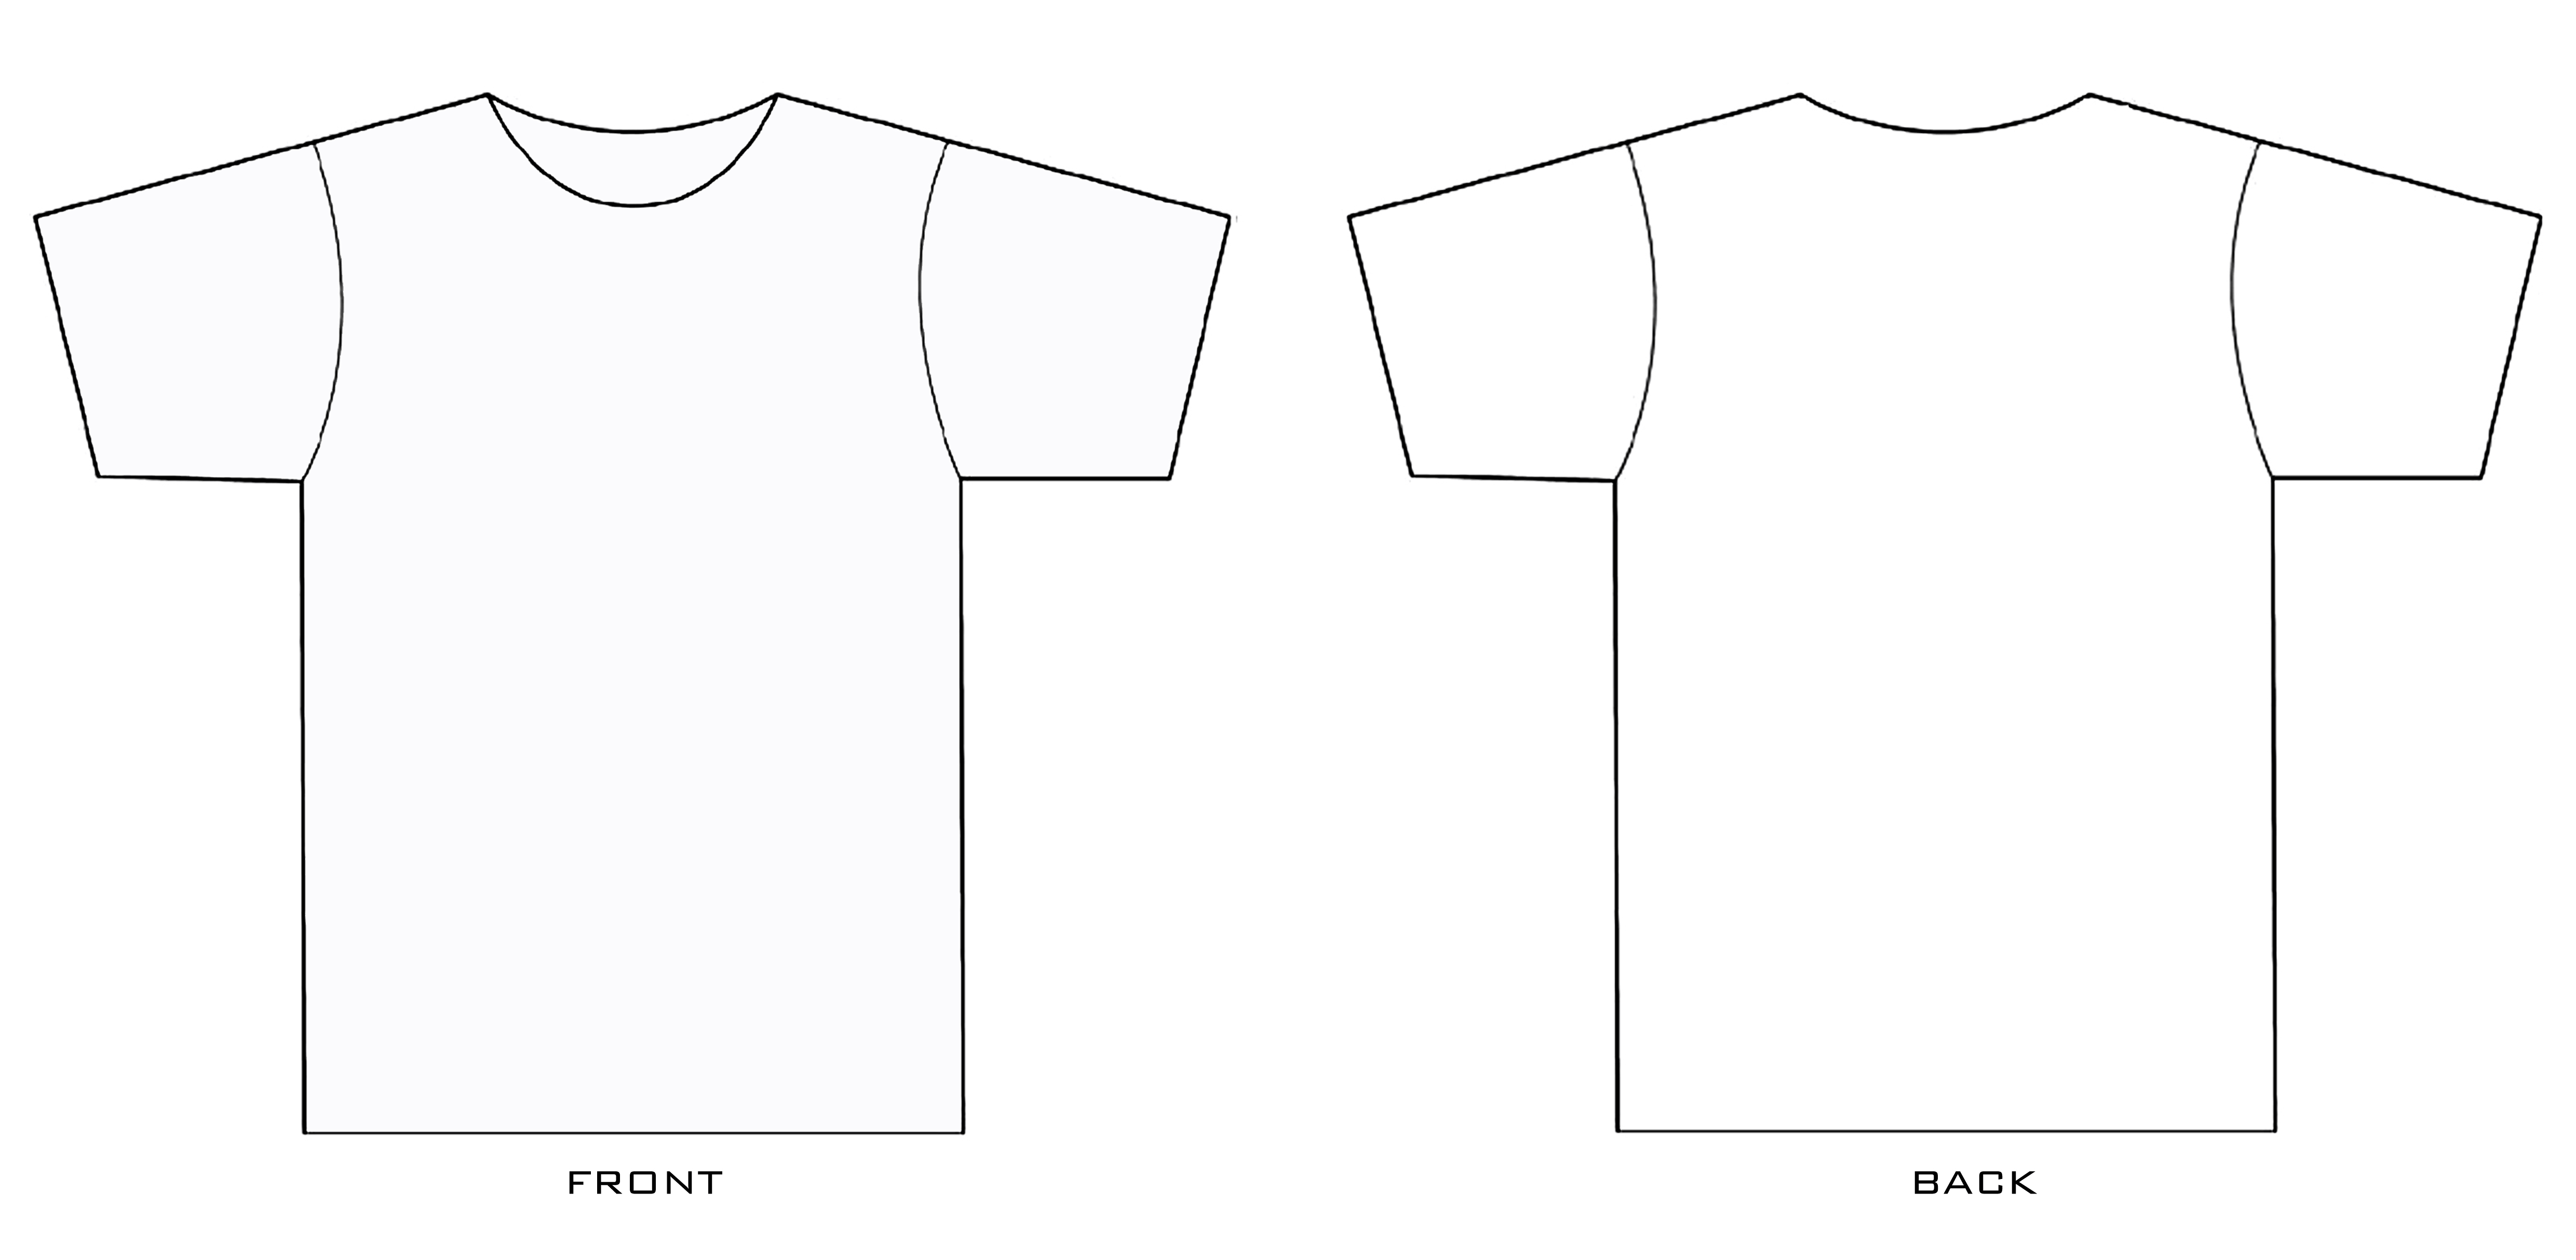 Free Printable T Shirt Design Template - Printable Templates